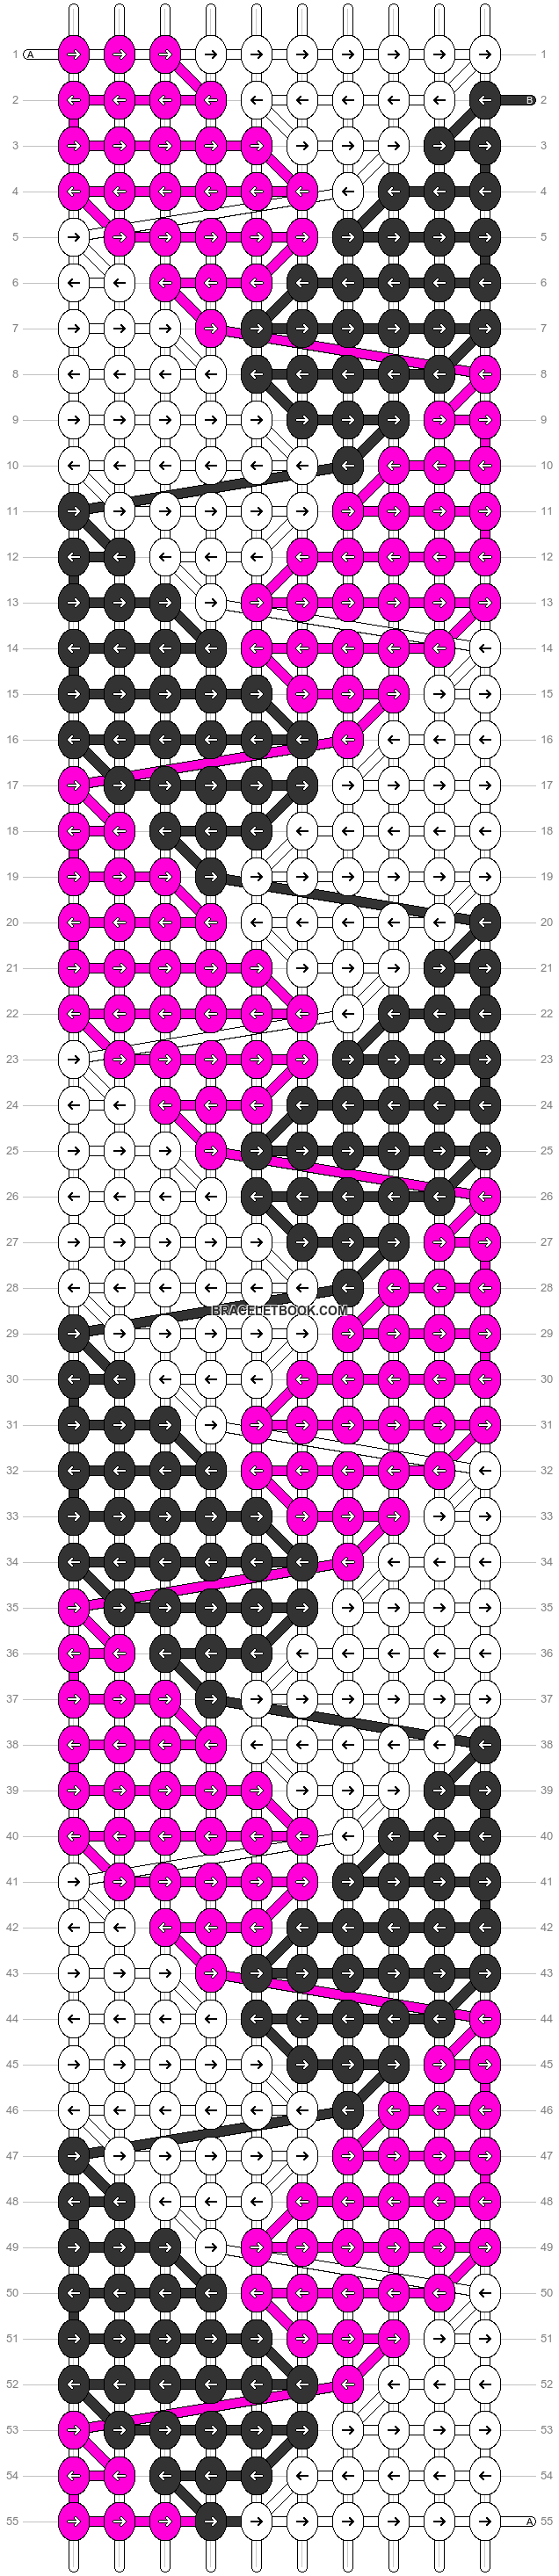 Alpha pattern #25291 variation #2125 pattern